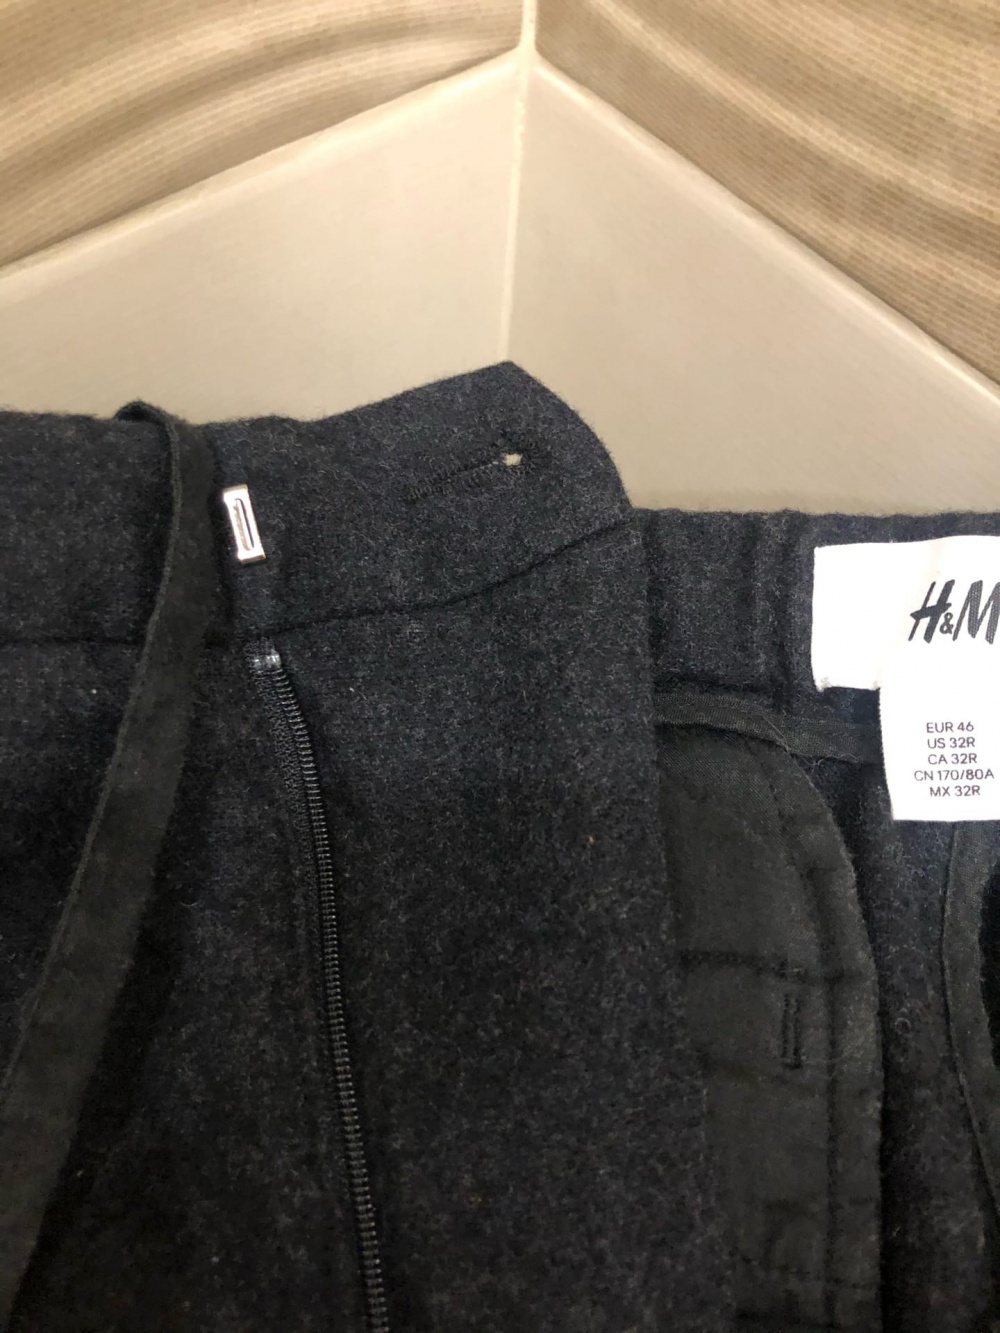 Шерстяные брюки джогеры H&M.Размер Евр.46.